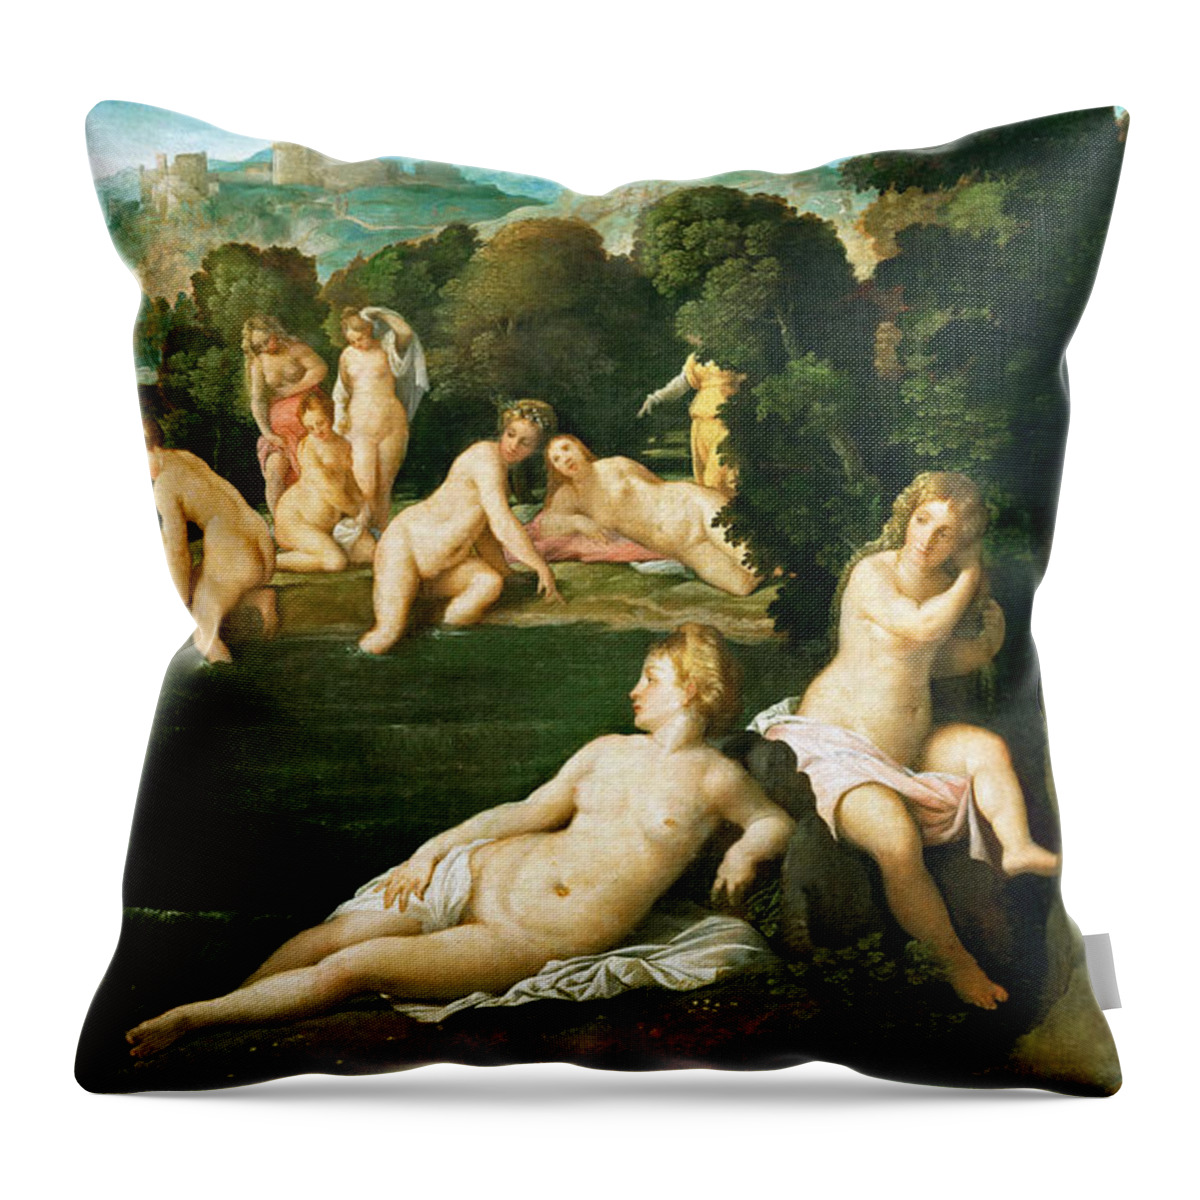 Palma Vecchio Throw Pillow featuring the painting Diana and Callisto by Palma Vecchio